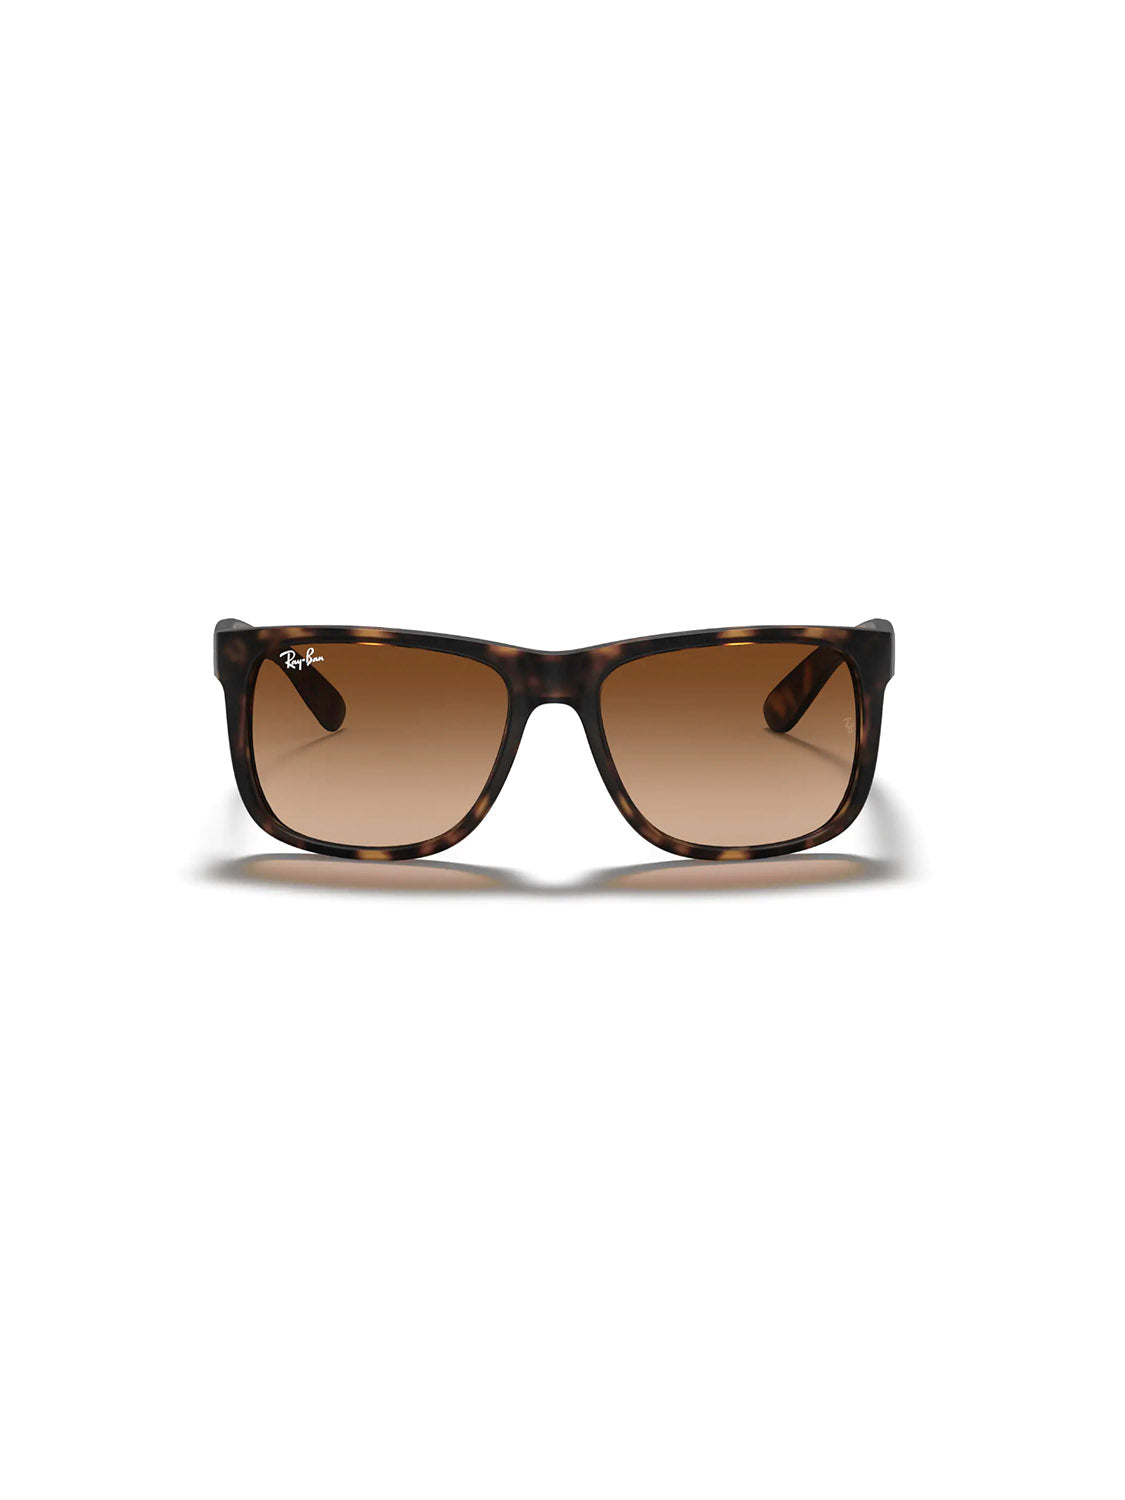 Ray Ban - RB4165 Justin Classic Sunglasses